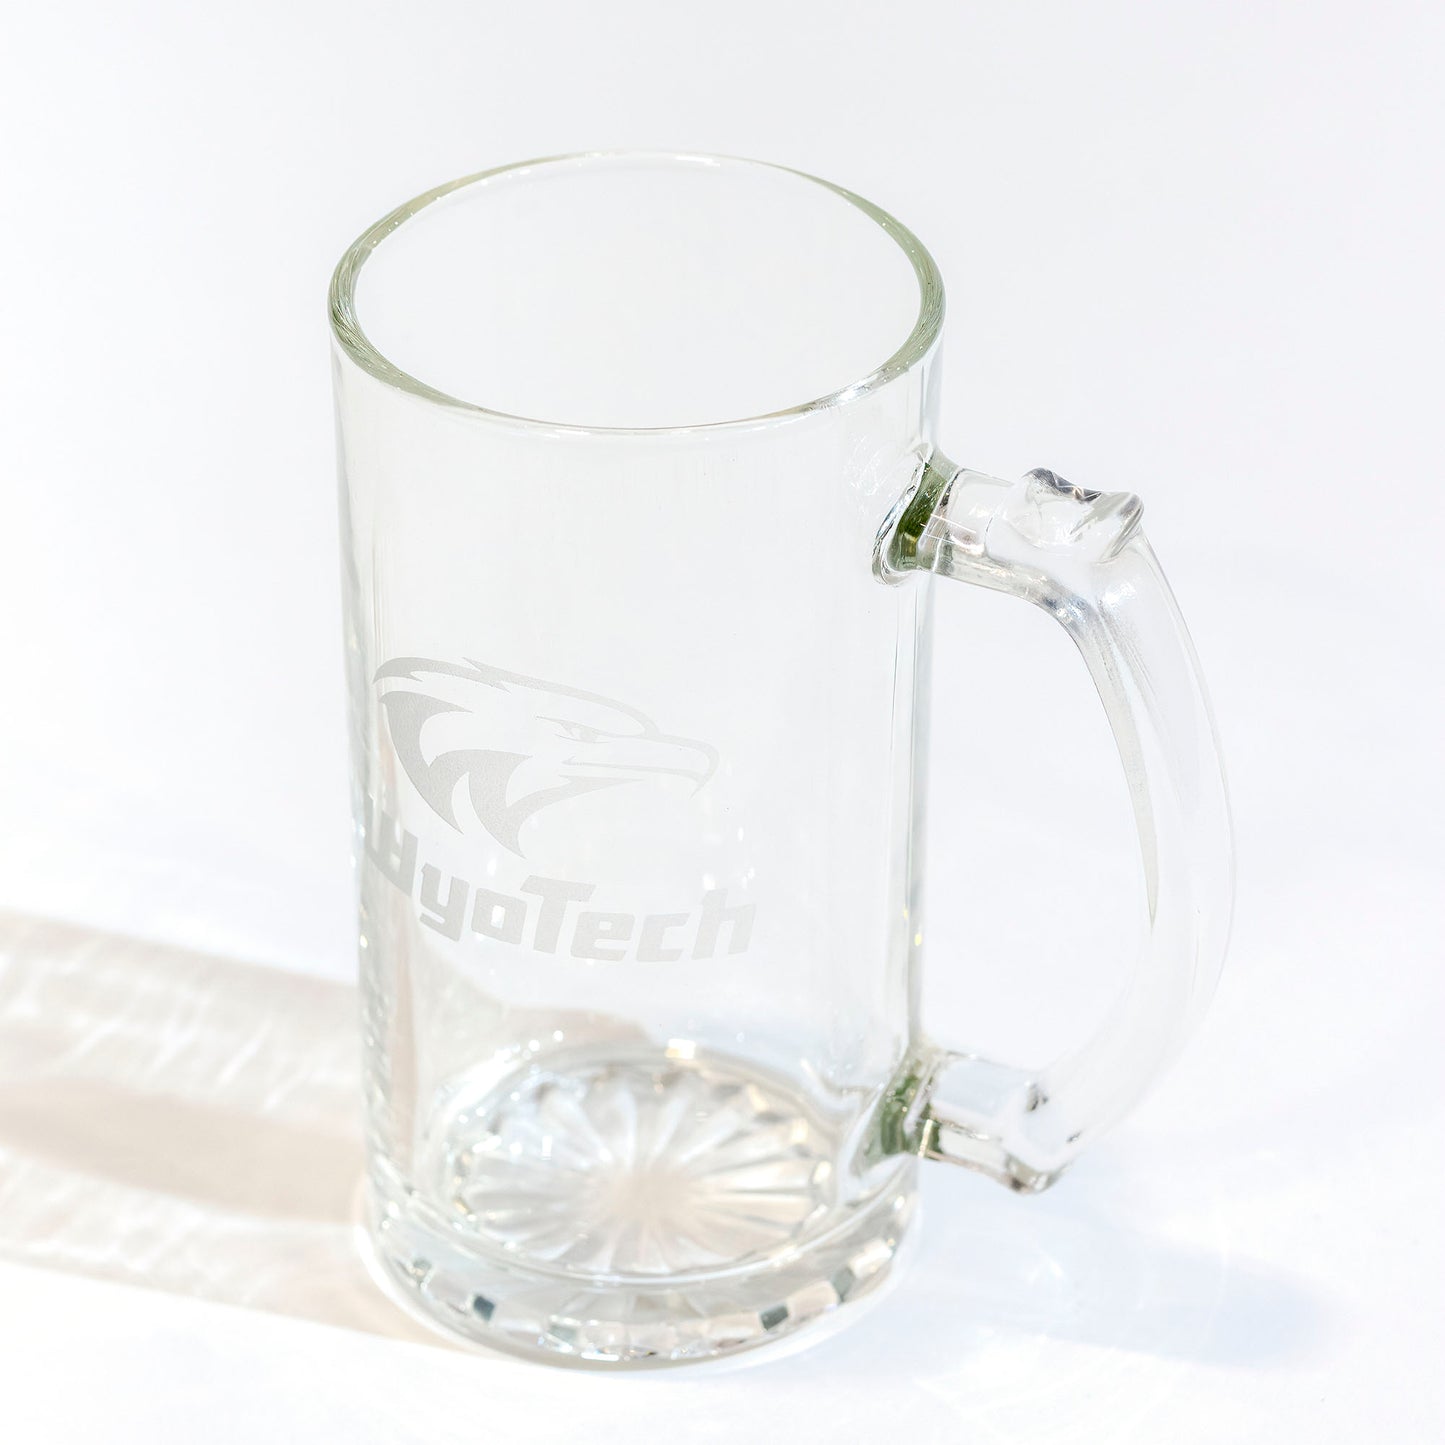 WyoTech Glass Mug